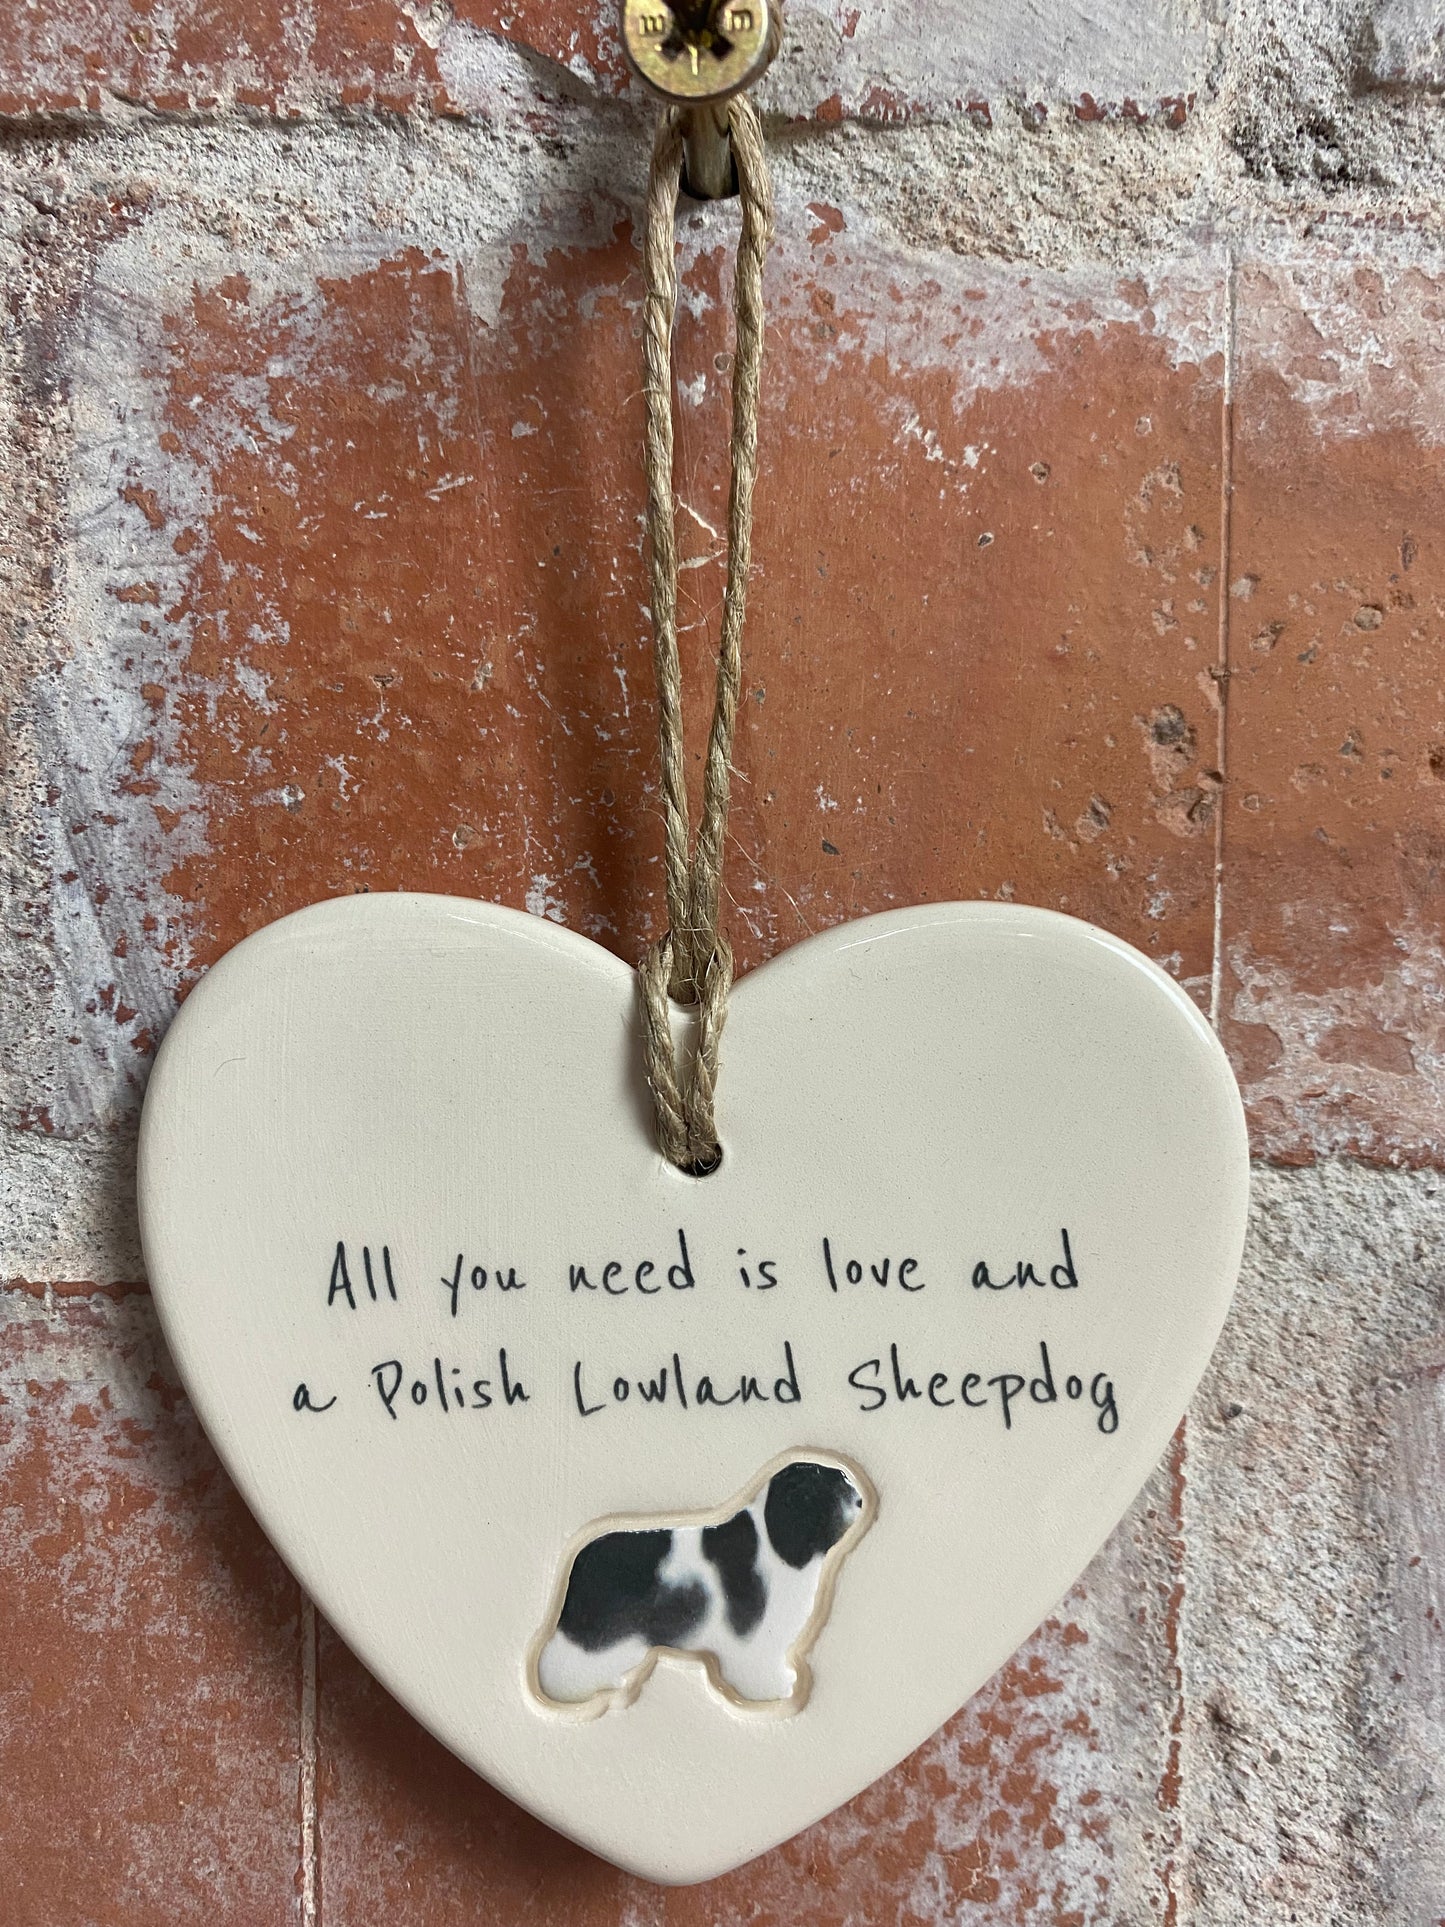 Polish Lowland Sheepdog ceramic heart